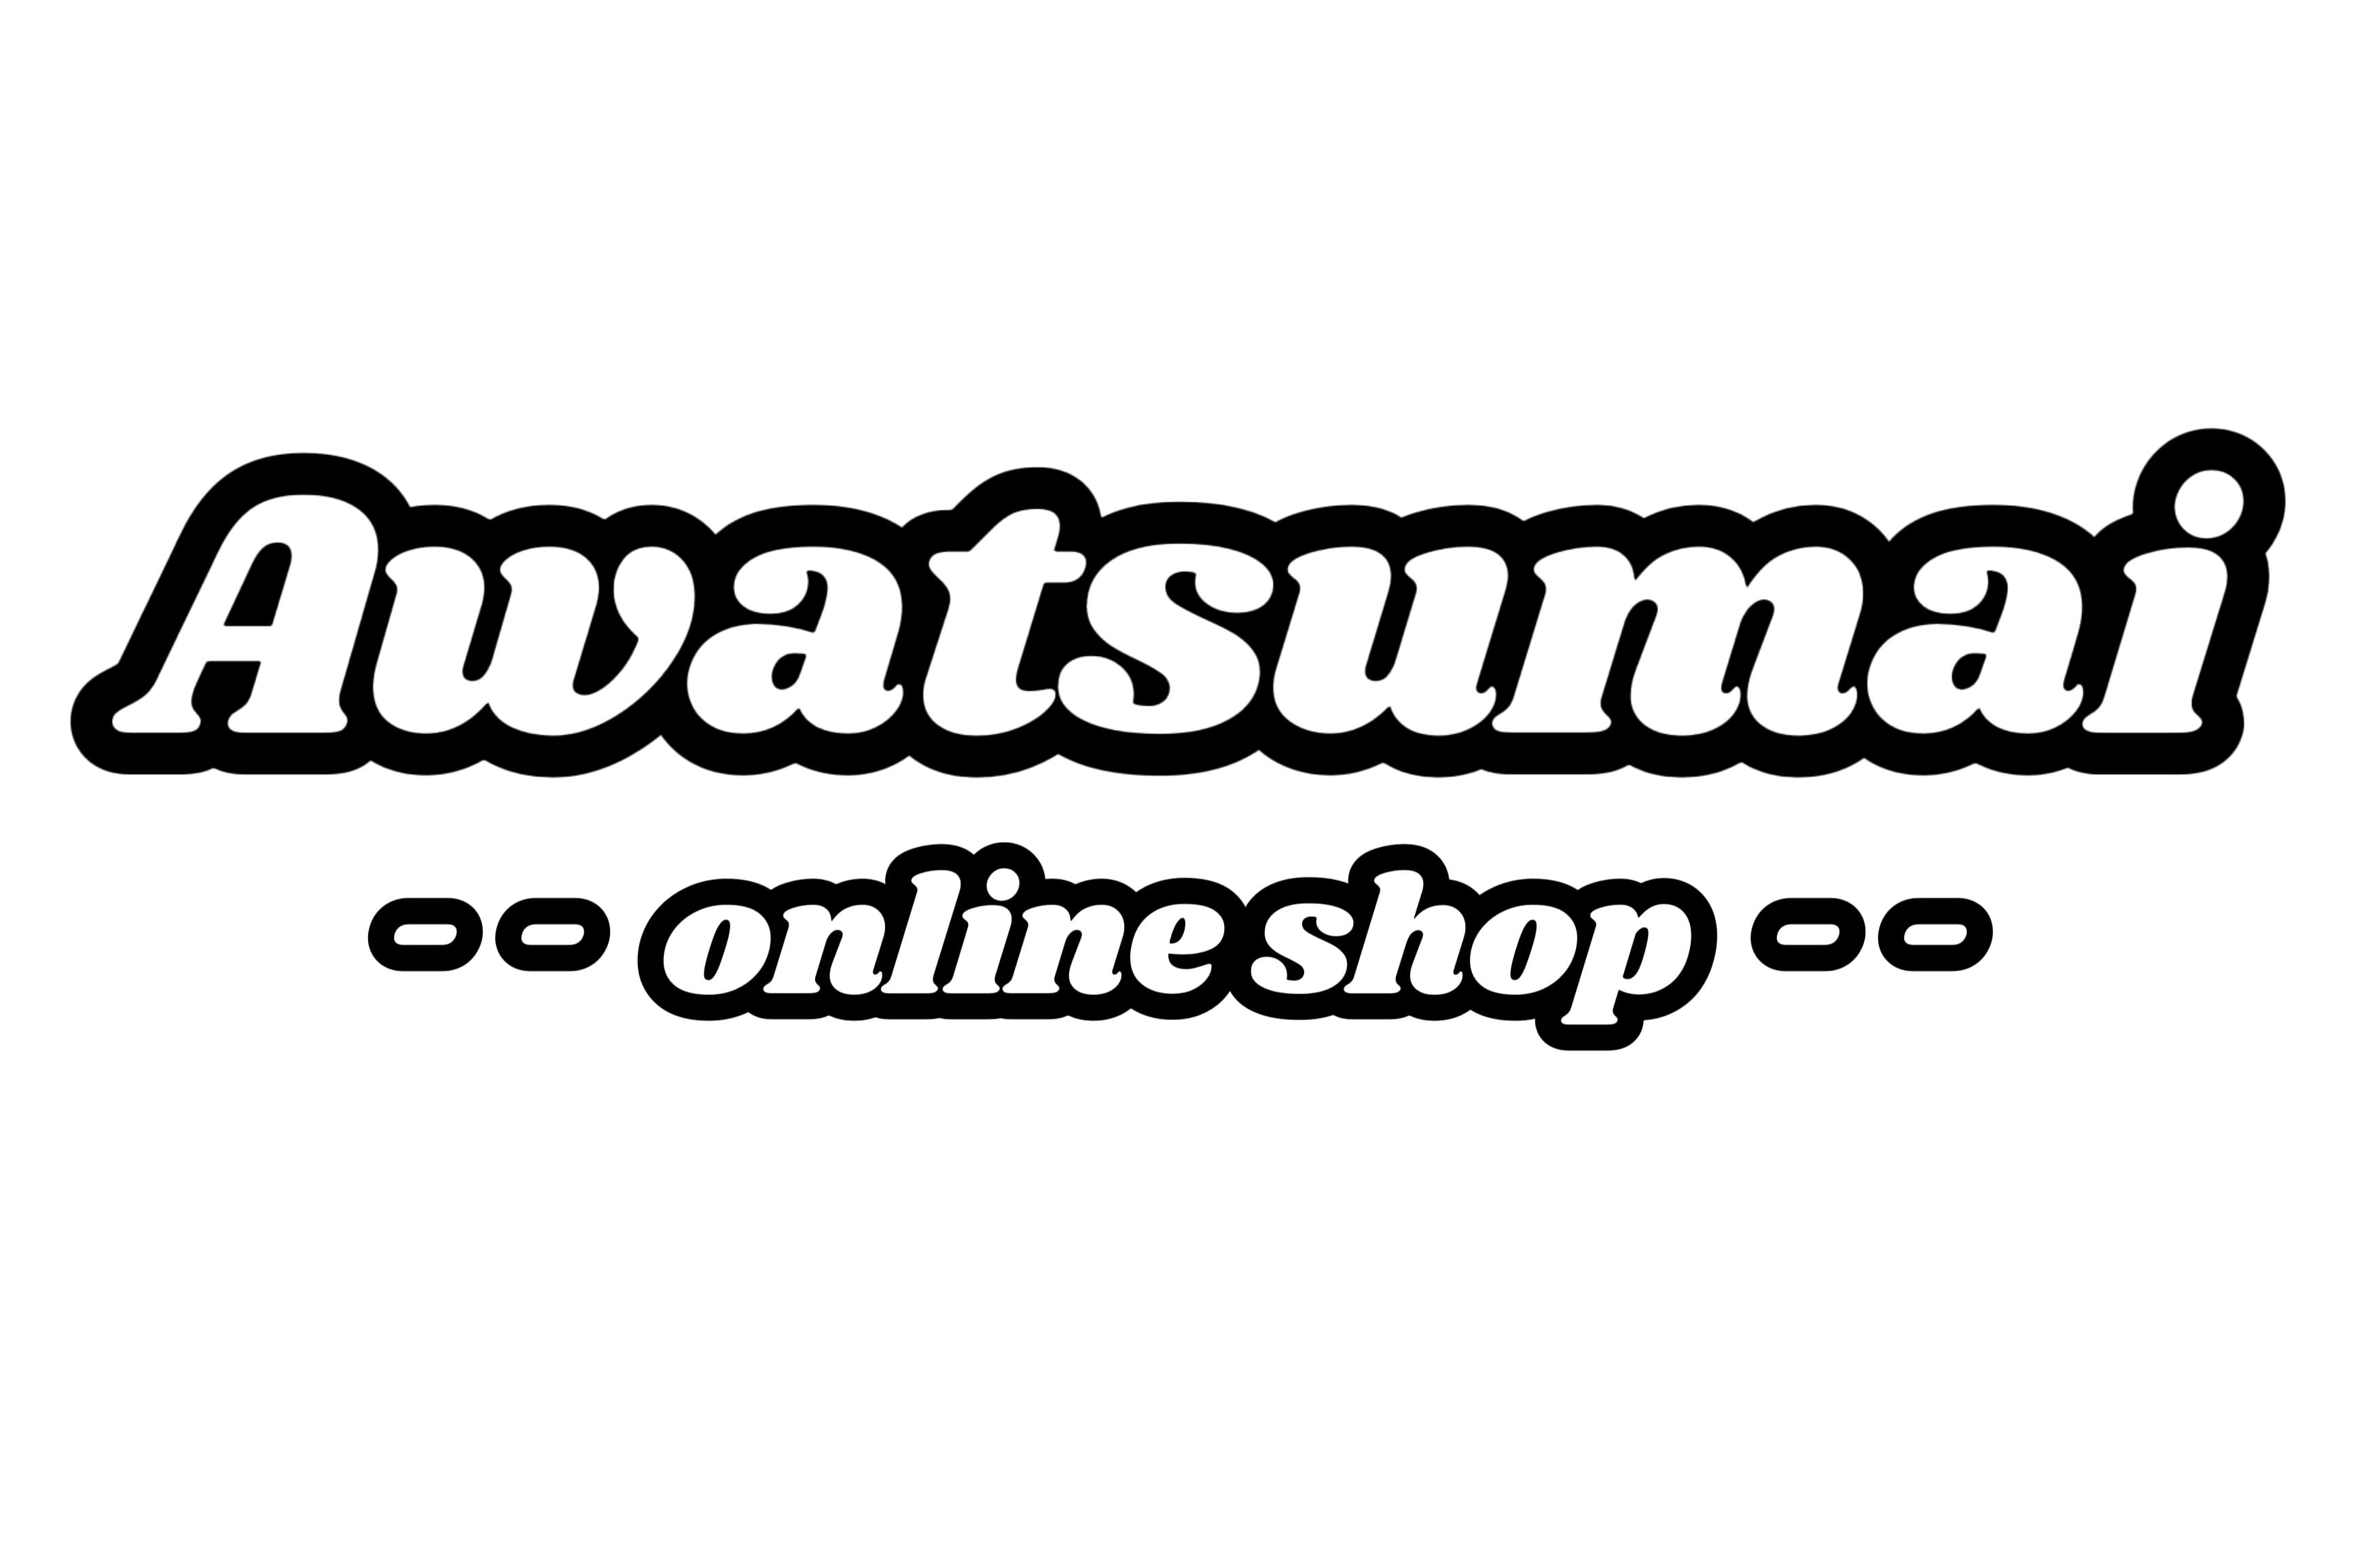 Awatsumai Online Shop